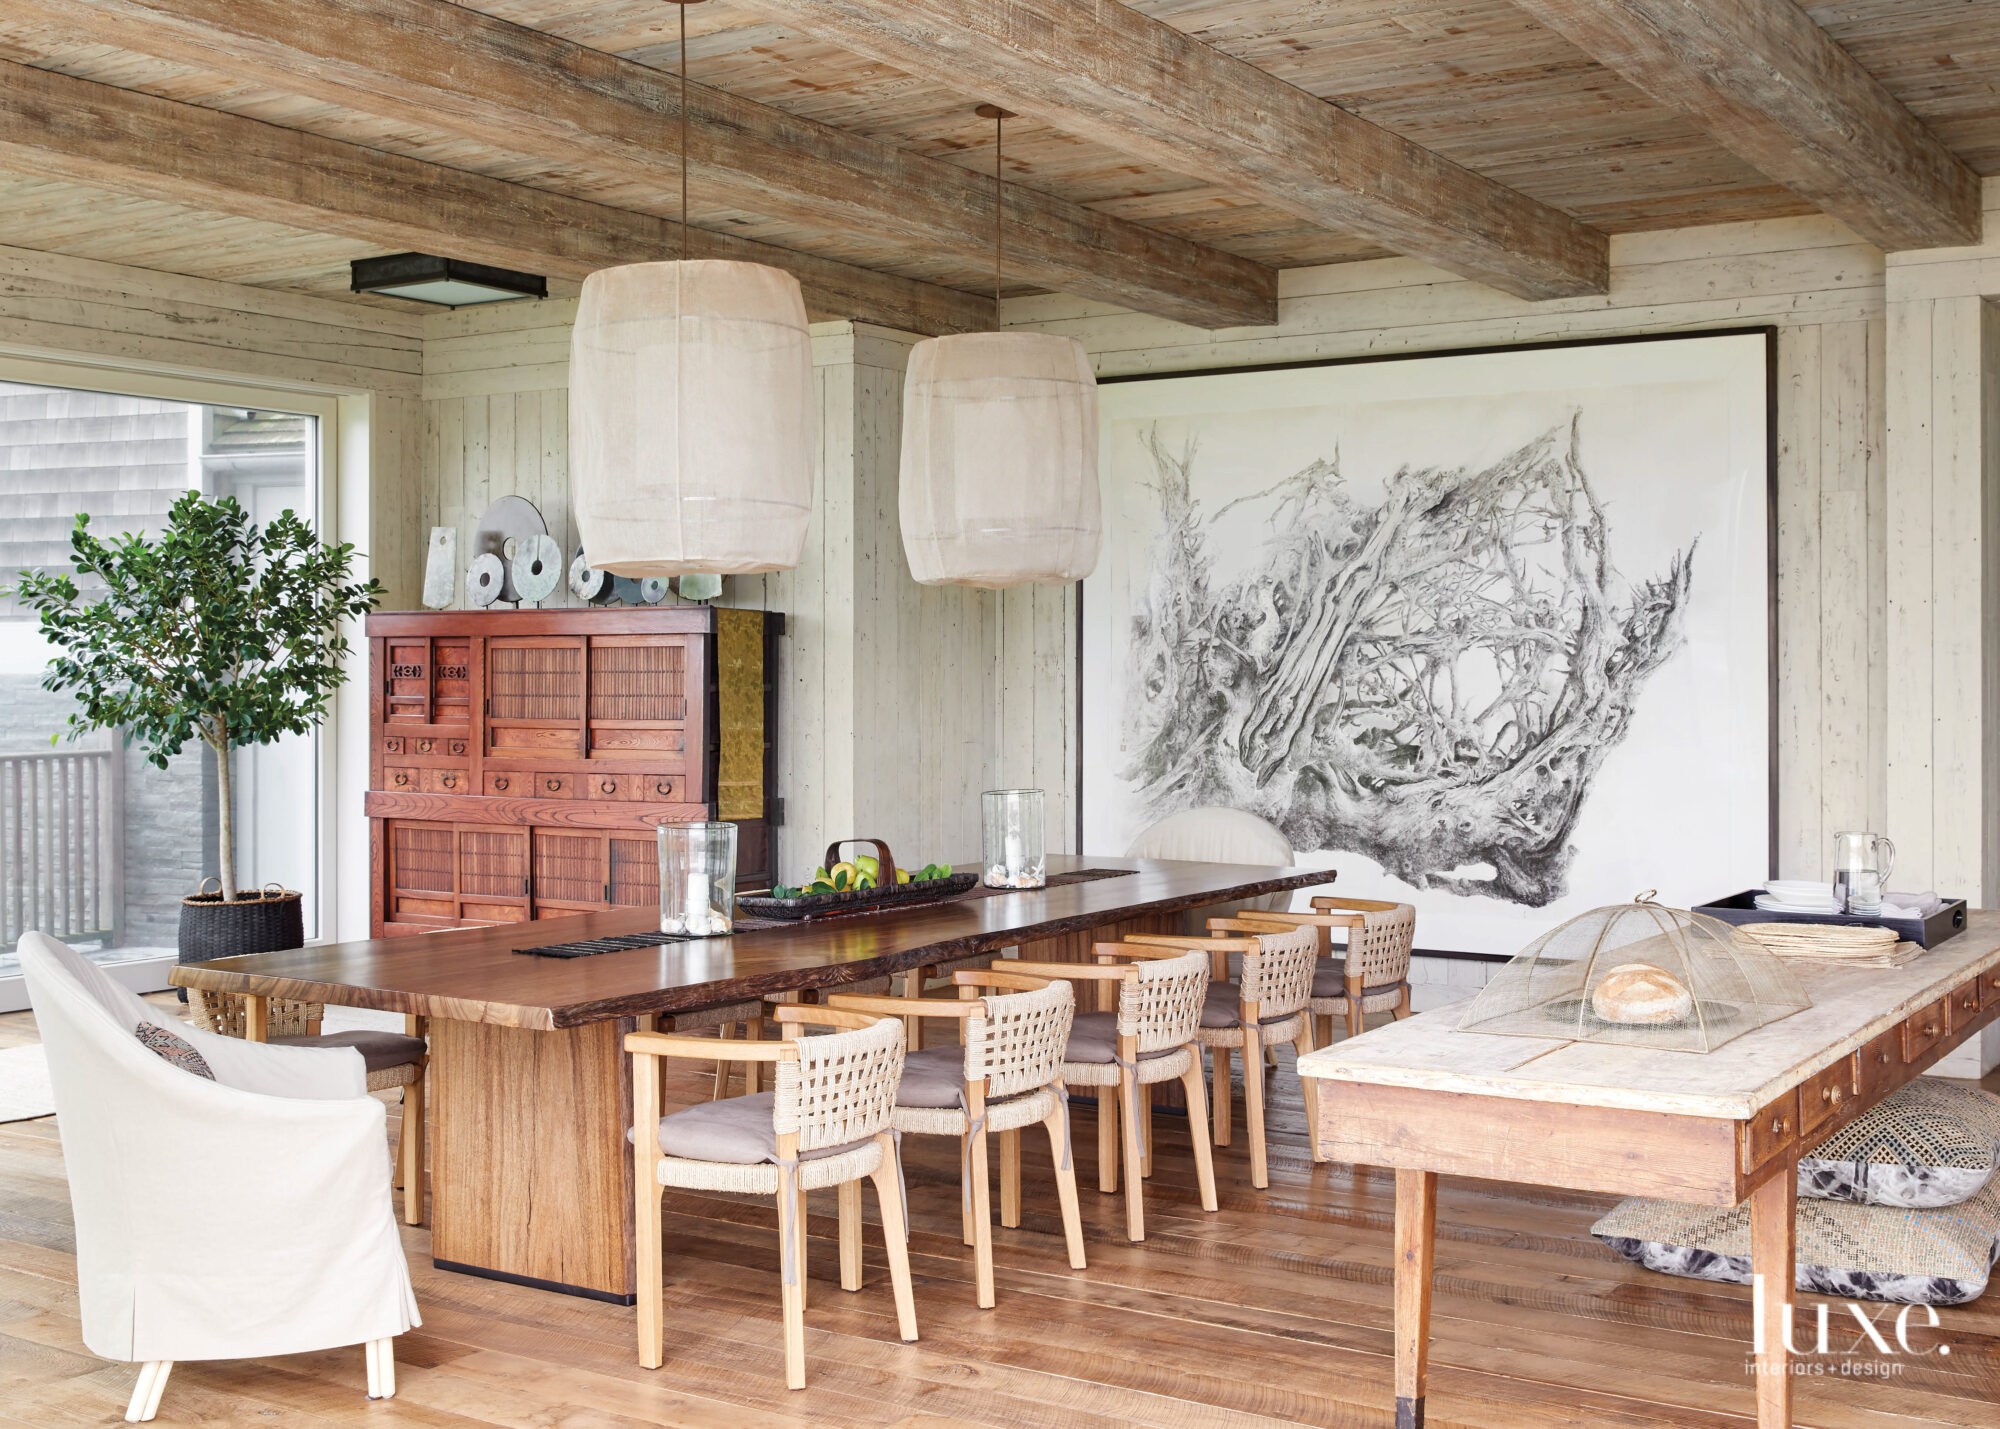 Beachy textures create a cozy, simple dining room